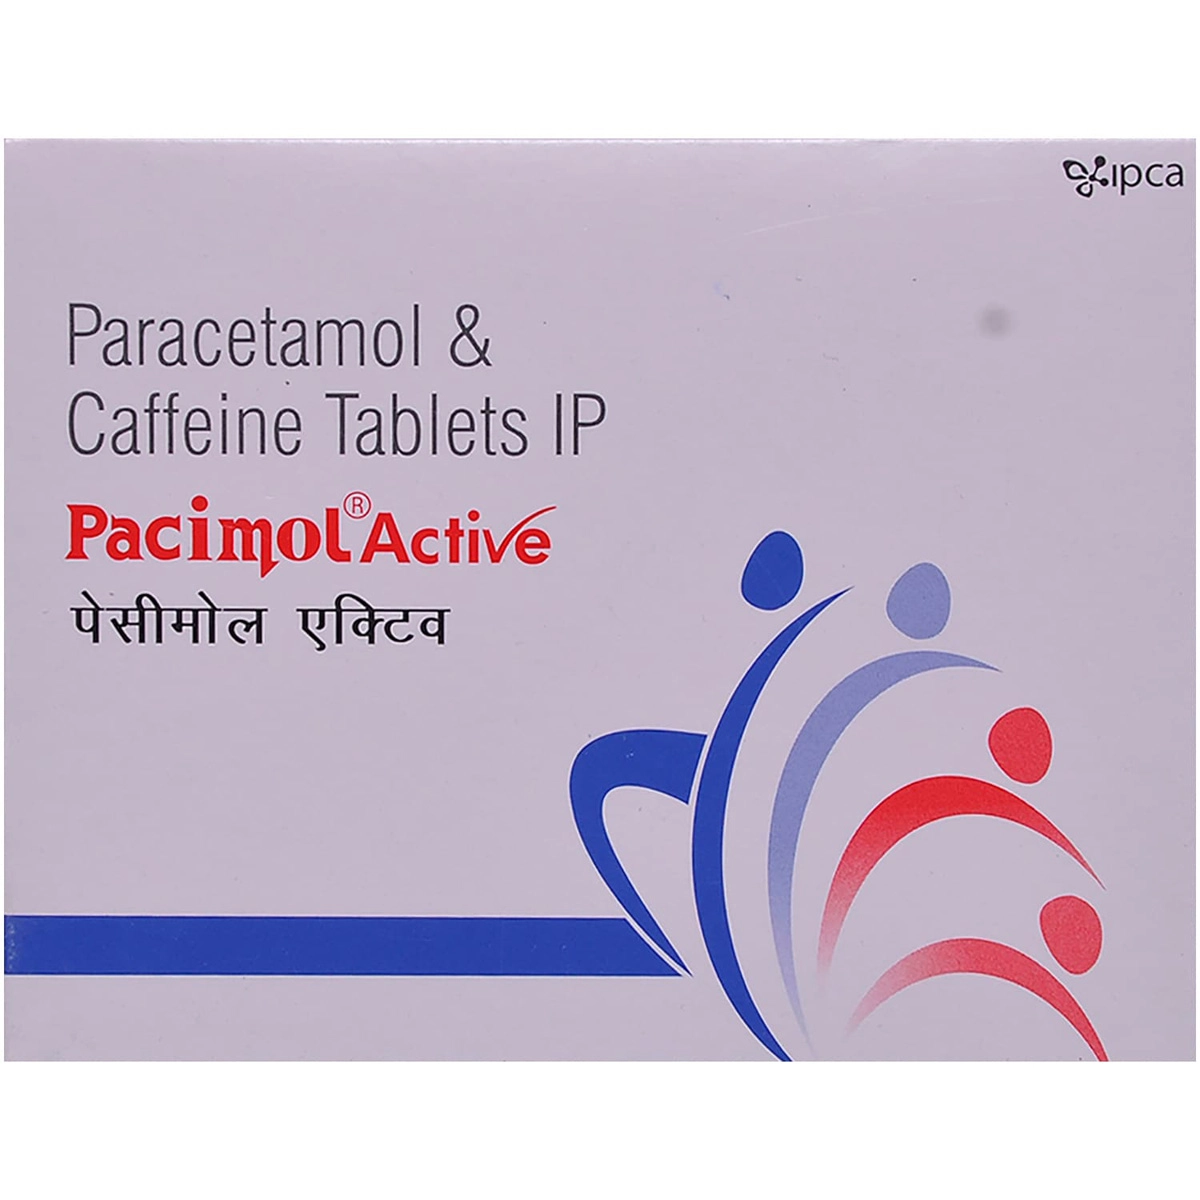 Crocin Pain Relief Paracetamol 500 mg Tablets